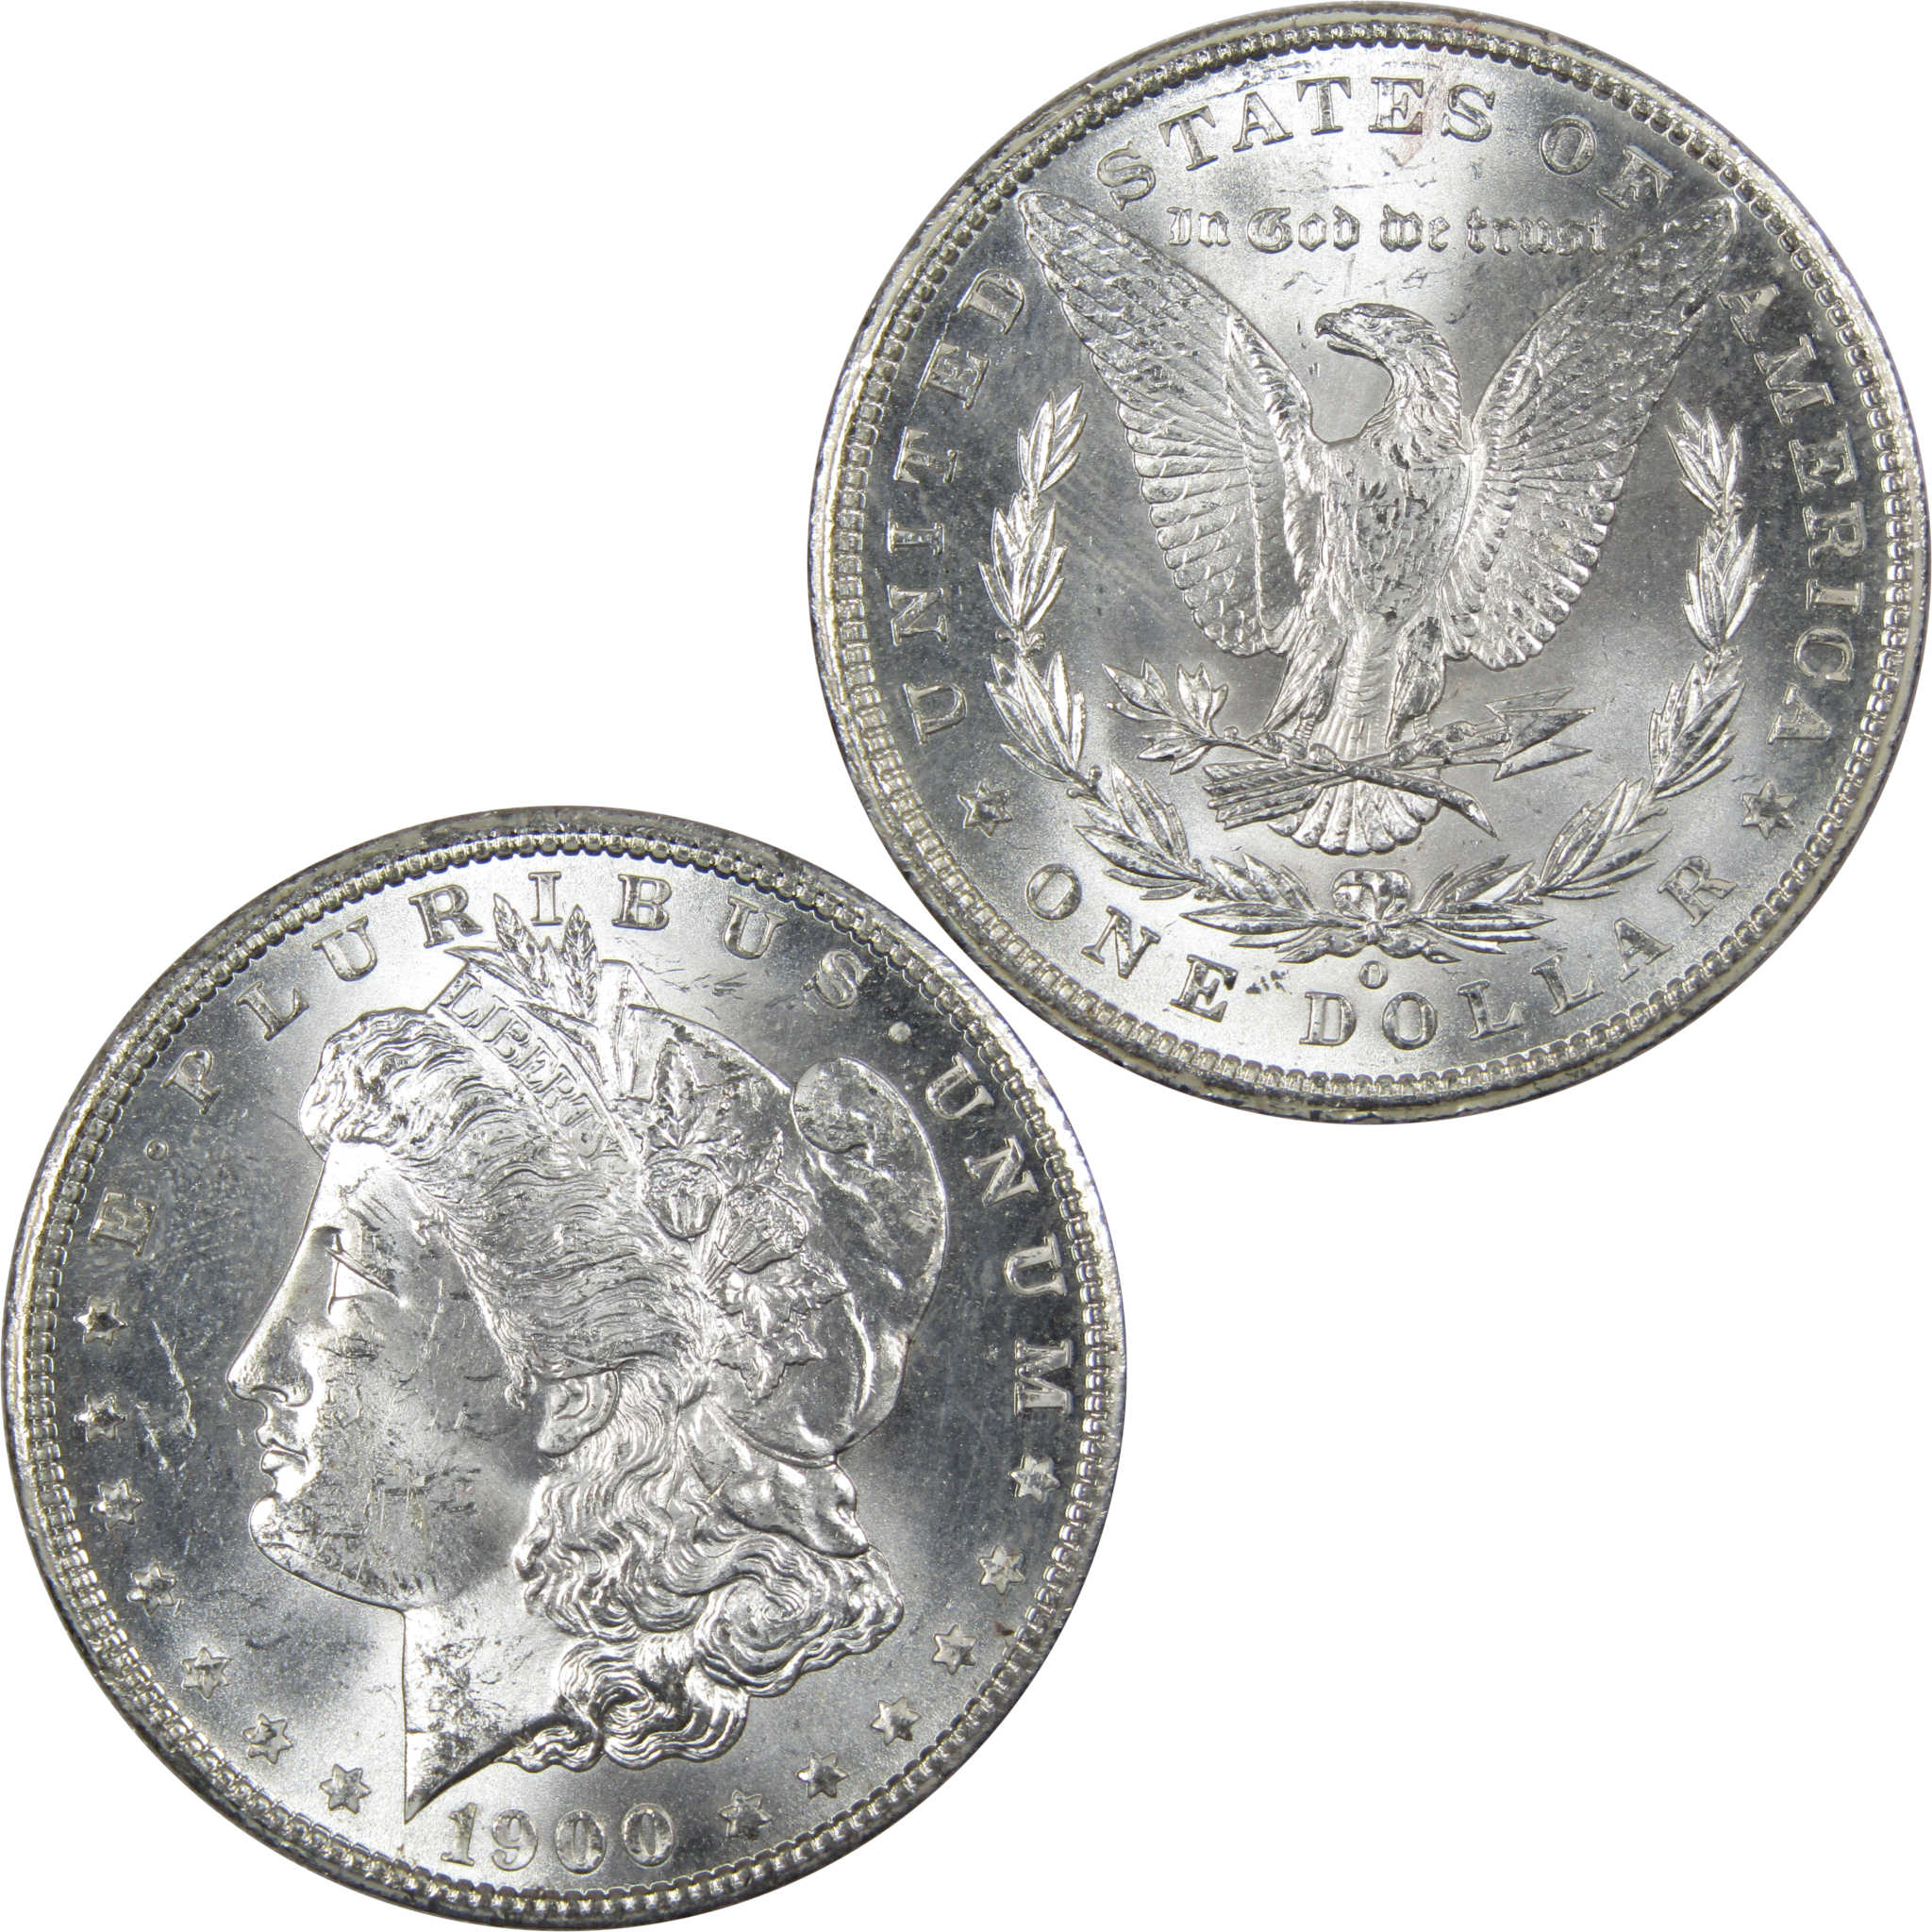 1900 O Morgan Dollar BU Uncirculated Mint State 90% Silver SKU:IPC9736 - Morgan coin - Morgan silver dollar - Morgan silver dollar for sale - Profile Coins &amp; Collectibles